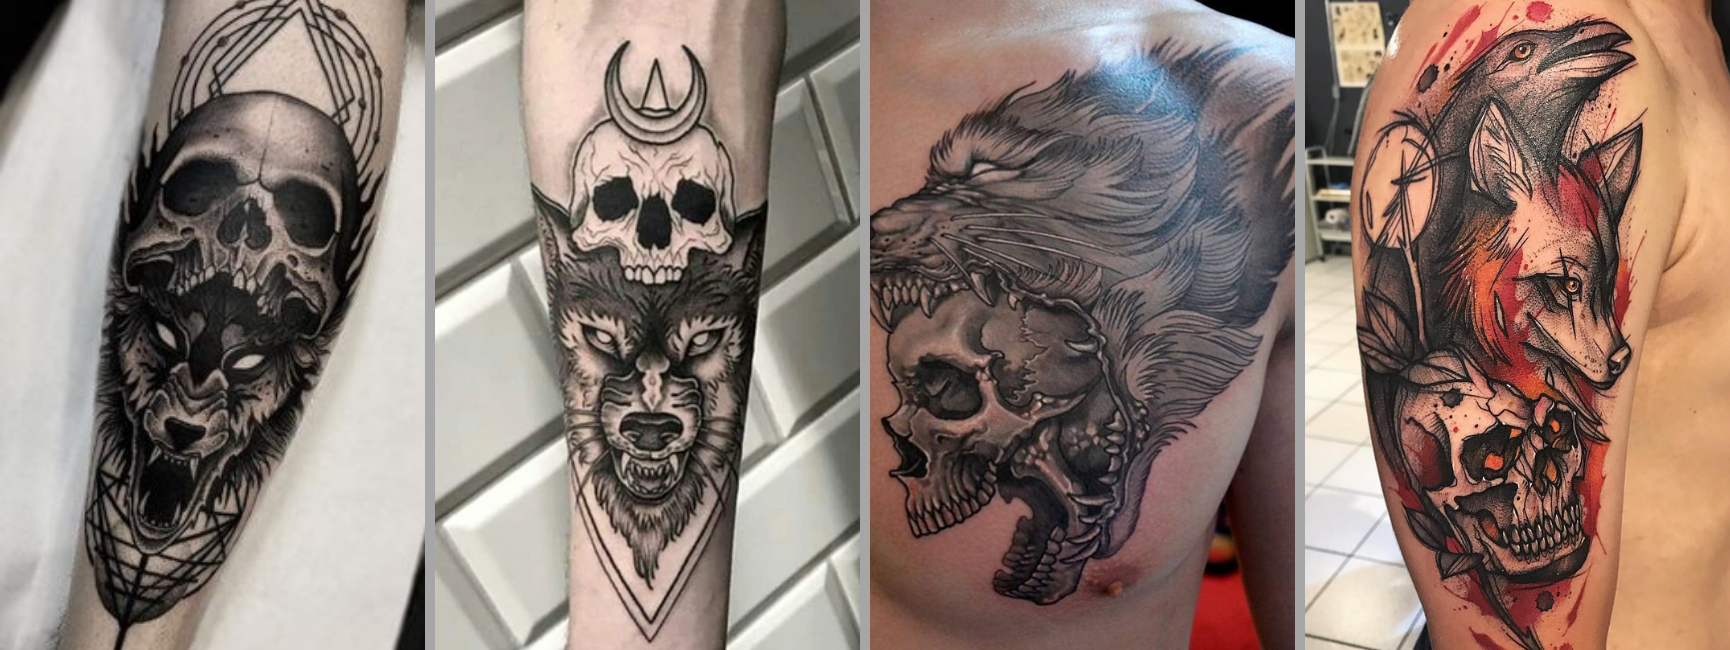 Black Wolf Warrior Forearm Temporary Tattoos For Men Adult Owl Forest  Compass Fake Tattoo Waterproof Half Sleeve Tatoos Sticker  Temporary  Tattoos  AliExpress